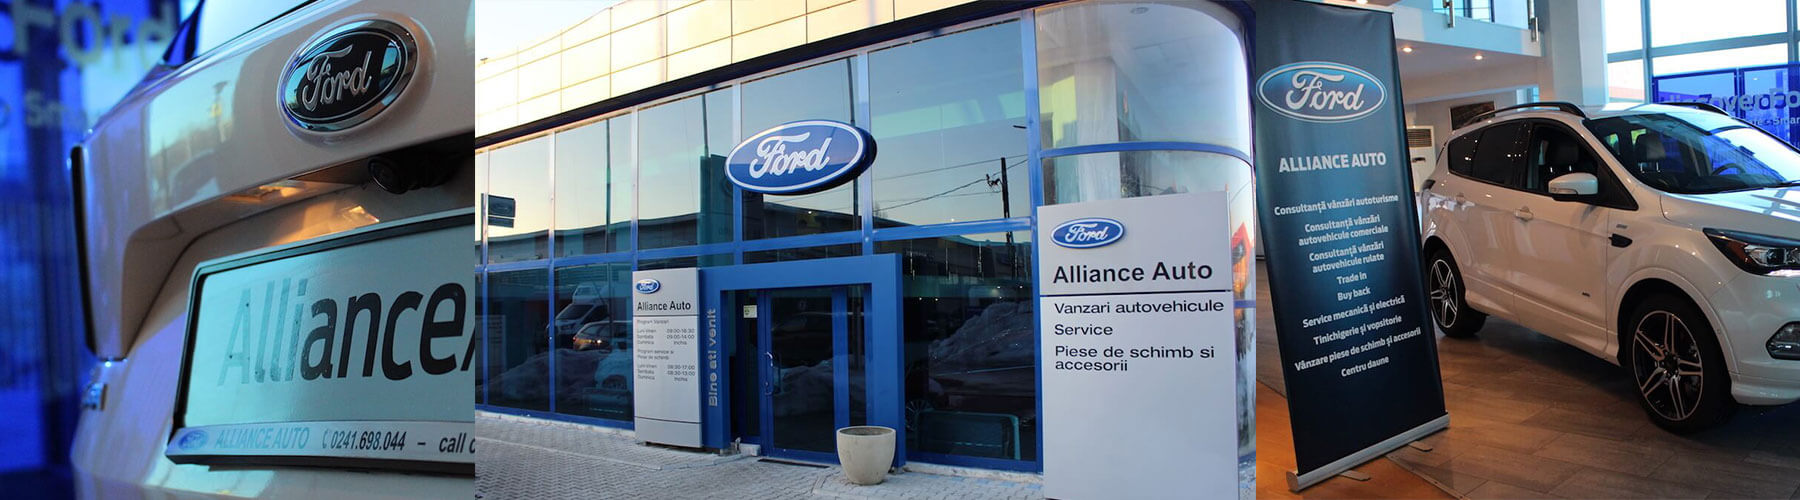 showroom ford alliance auto